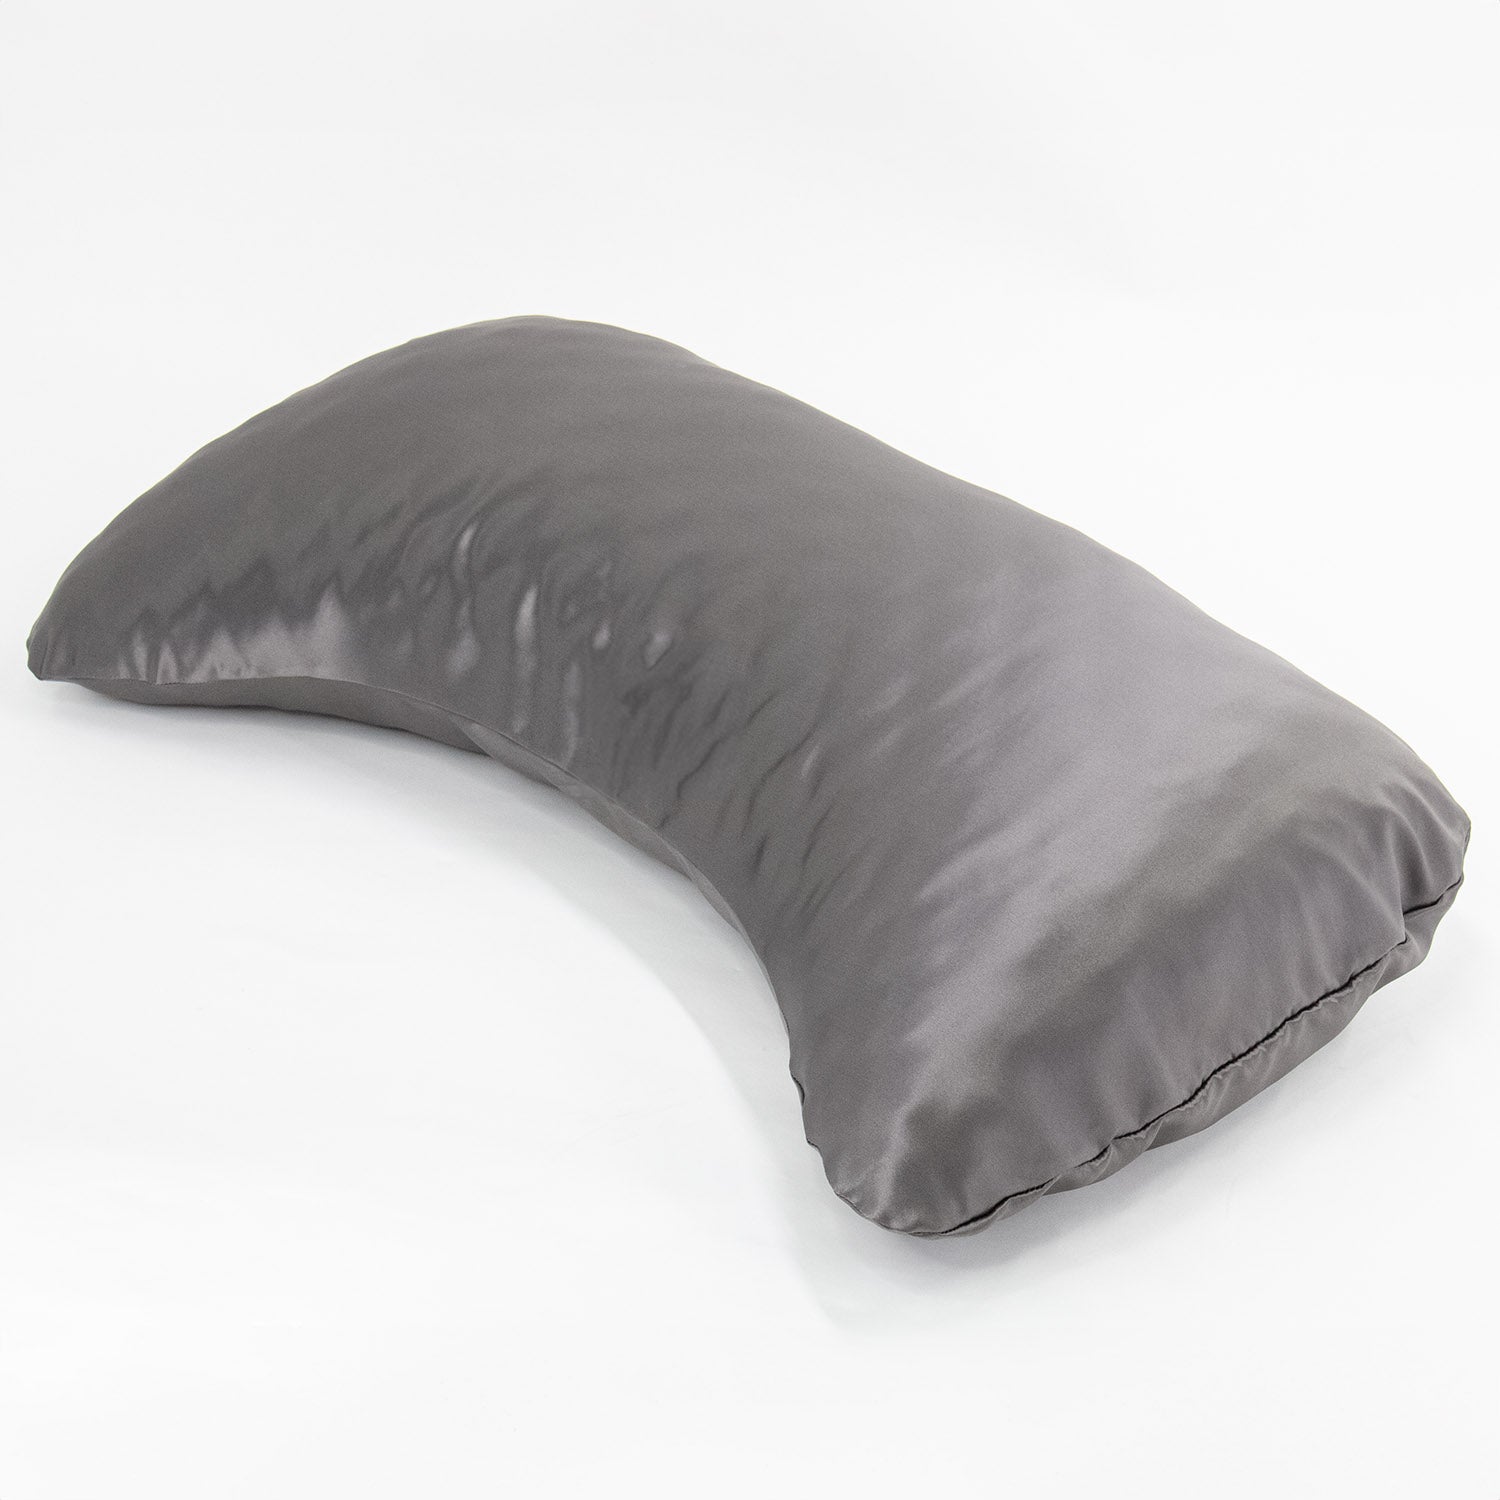 Mulberry Silk Pillowcase for Travel Pillows